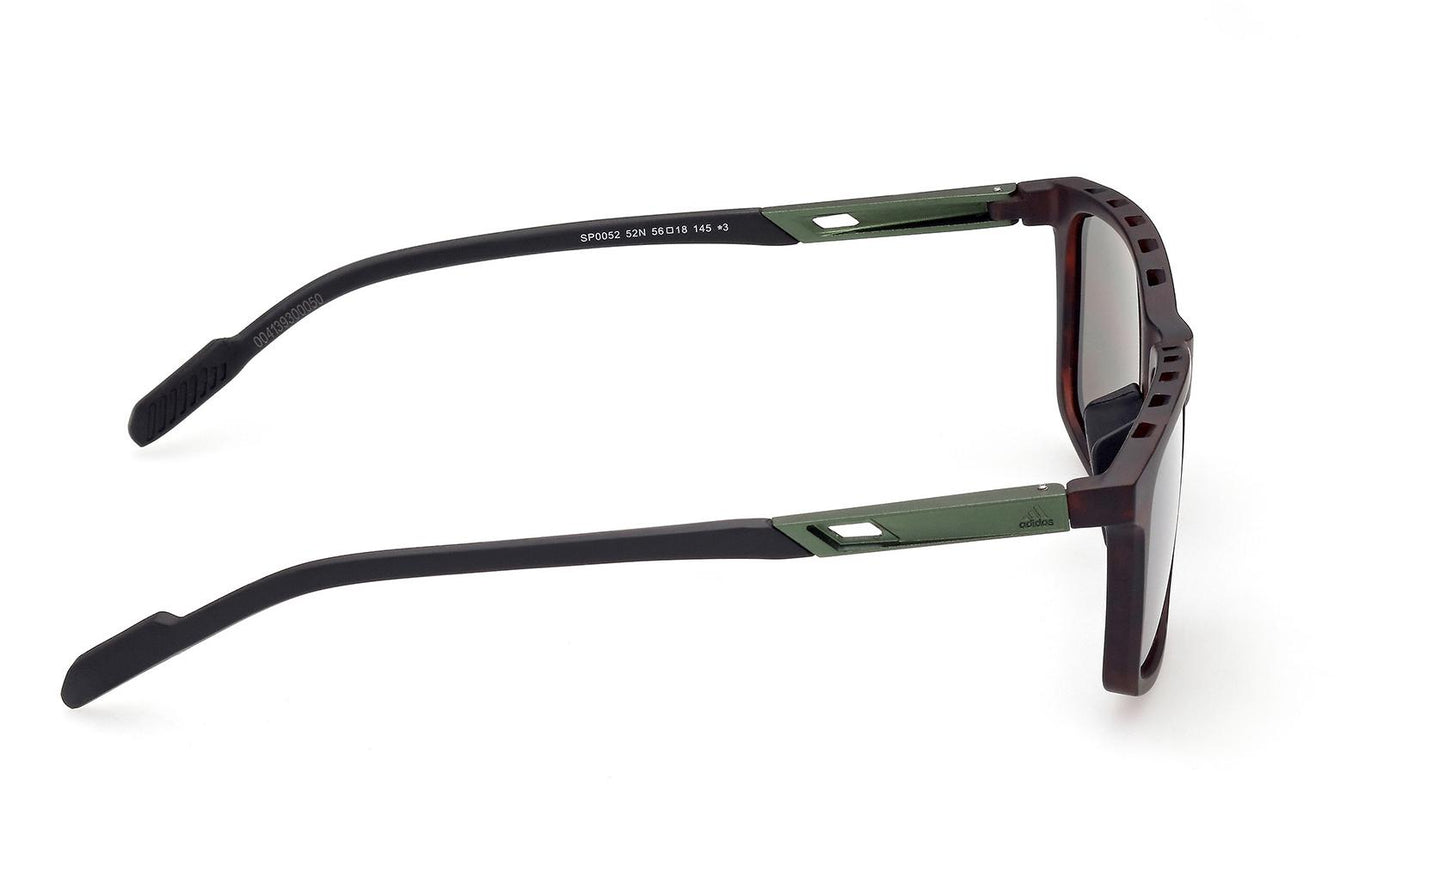 Load image into Gallery viewer, Adidas Sport Sunglasses 52N DARK HAVANA
